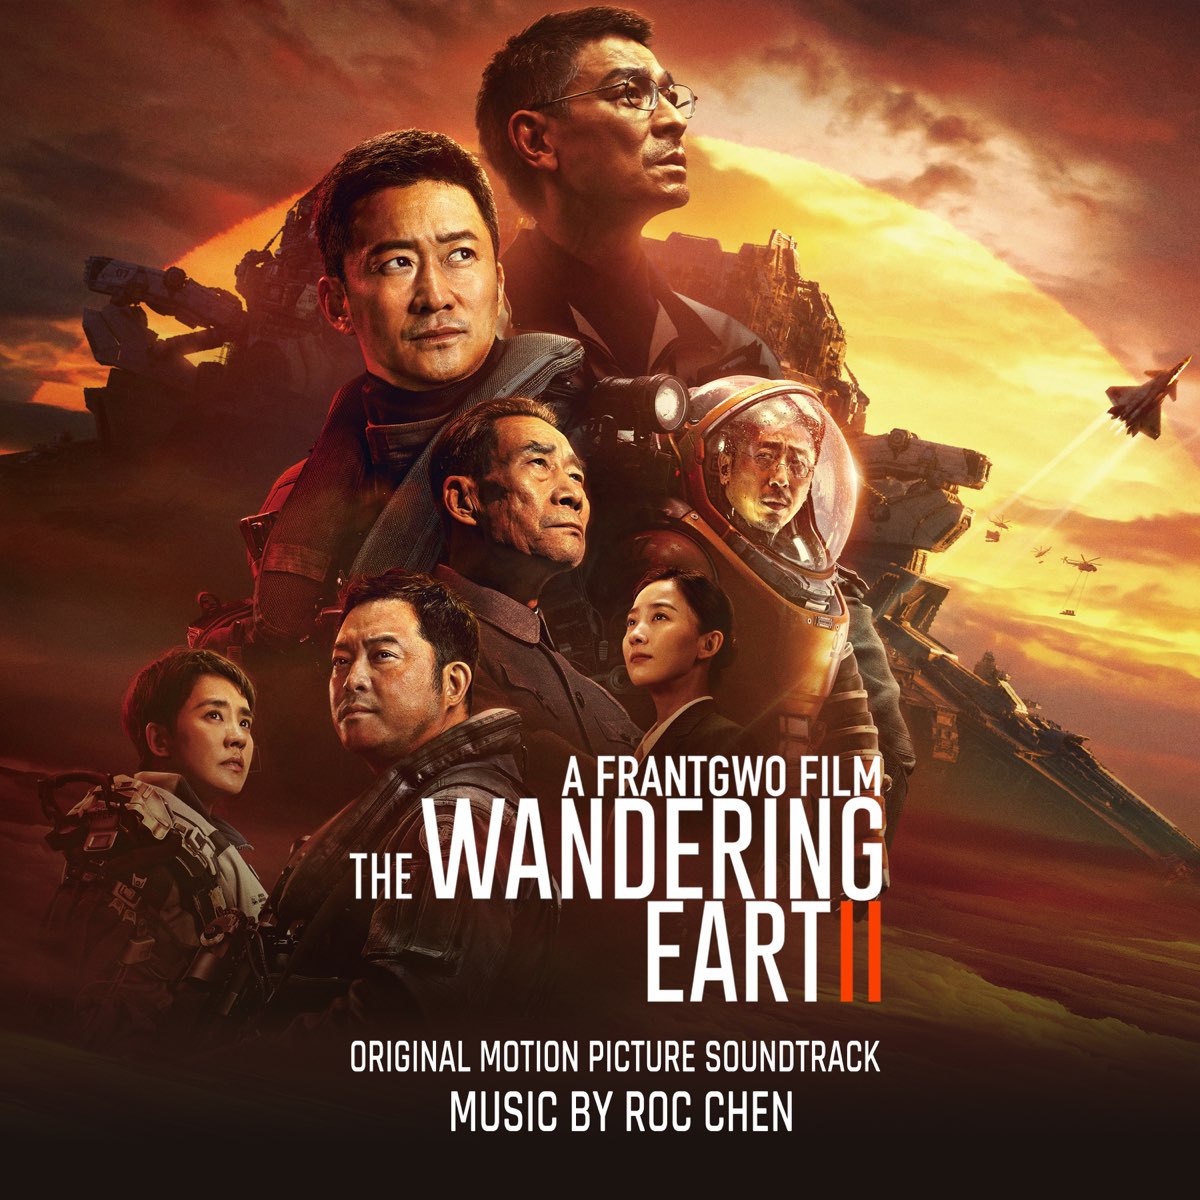 wandering earth 2 full movie